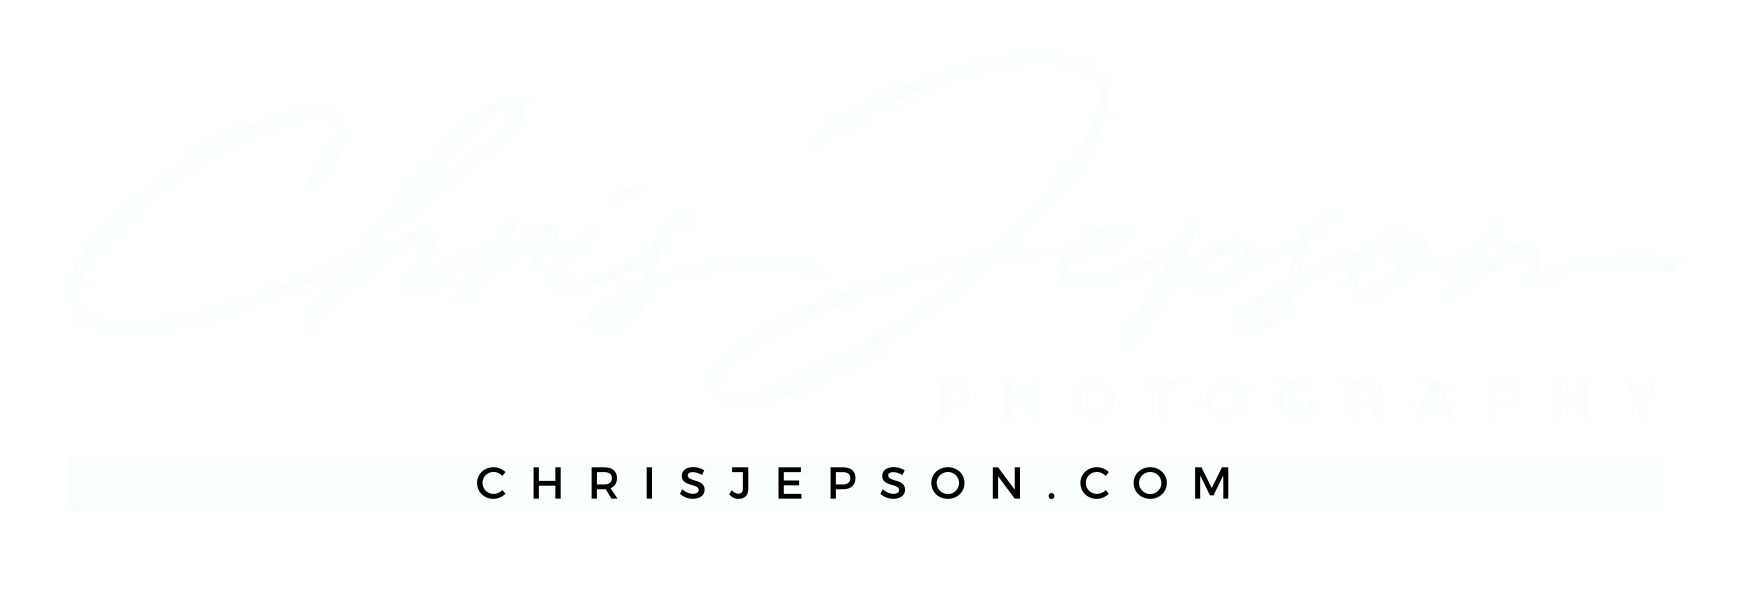 Chris Jepson Photography. Chris Jepson dot com.